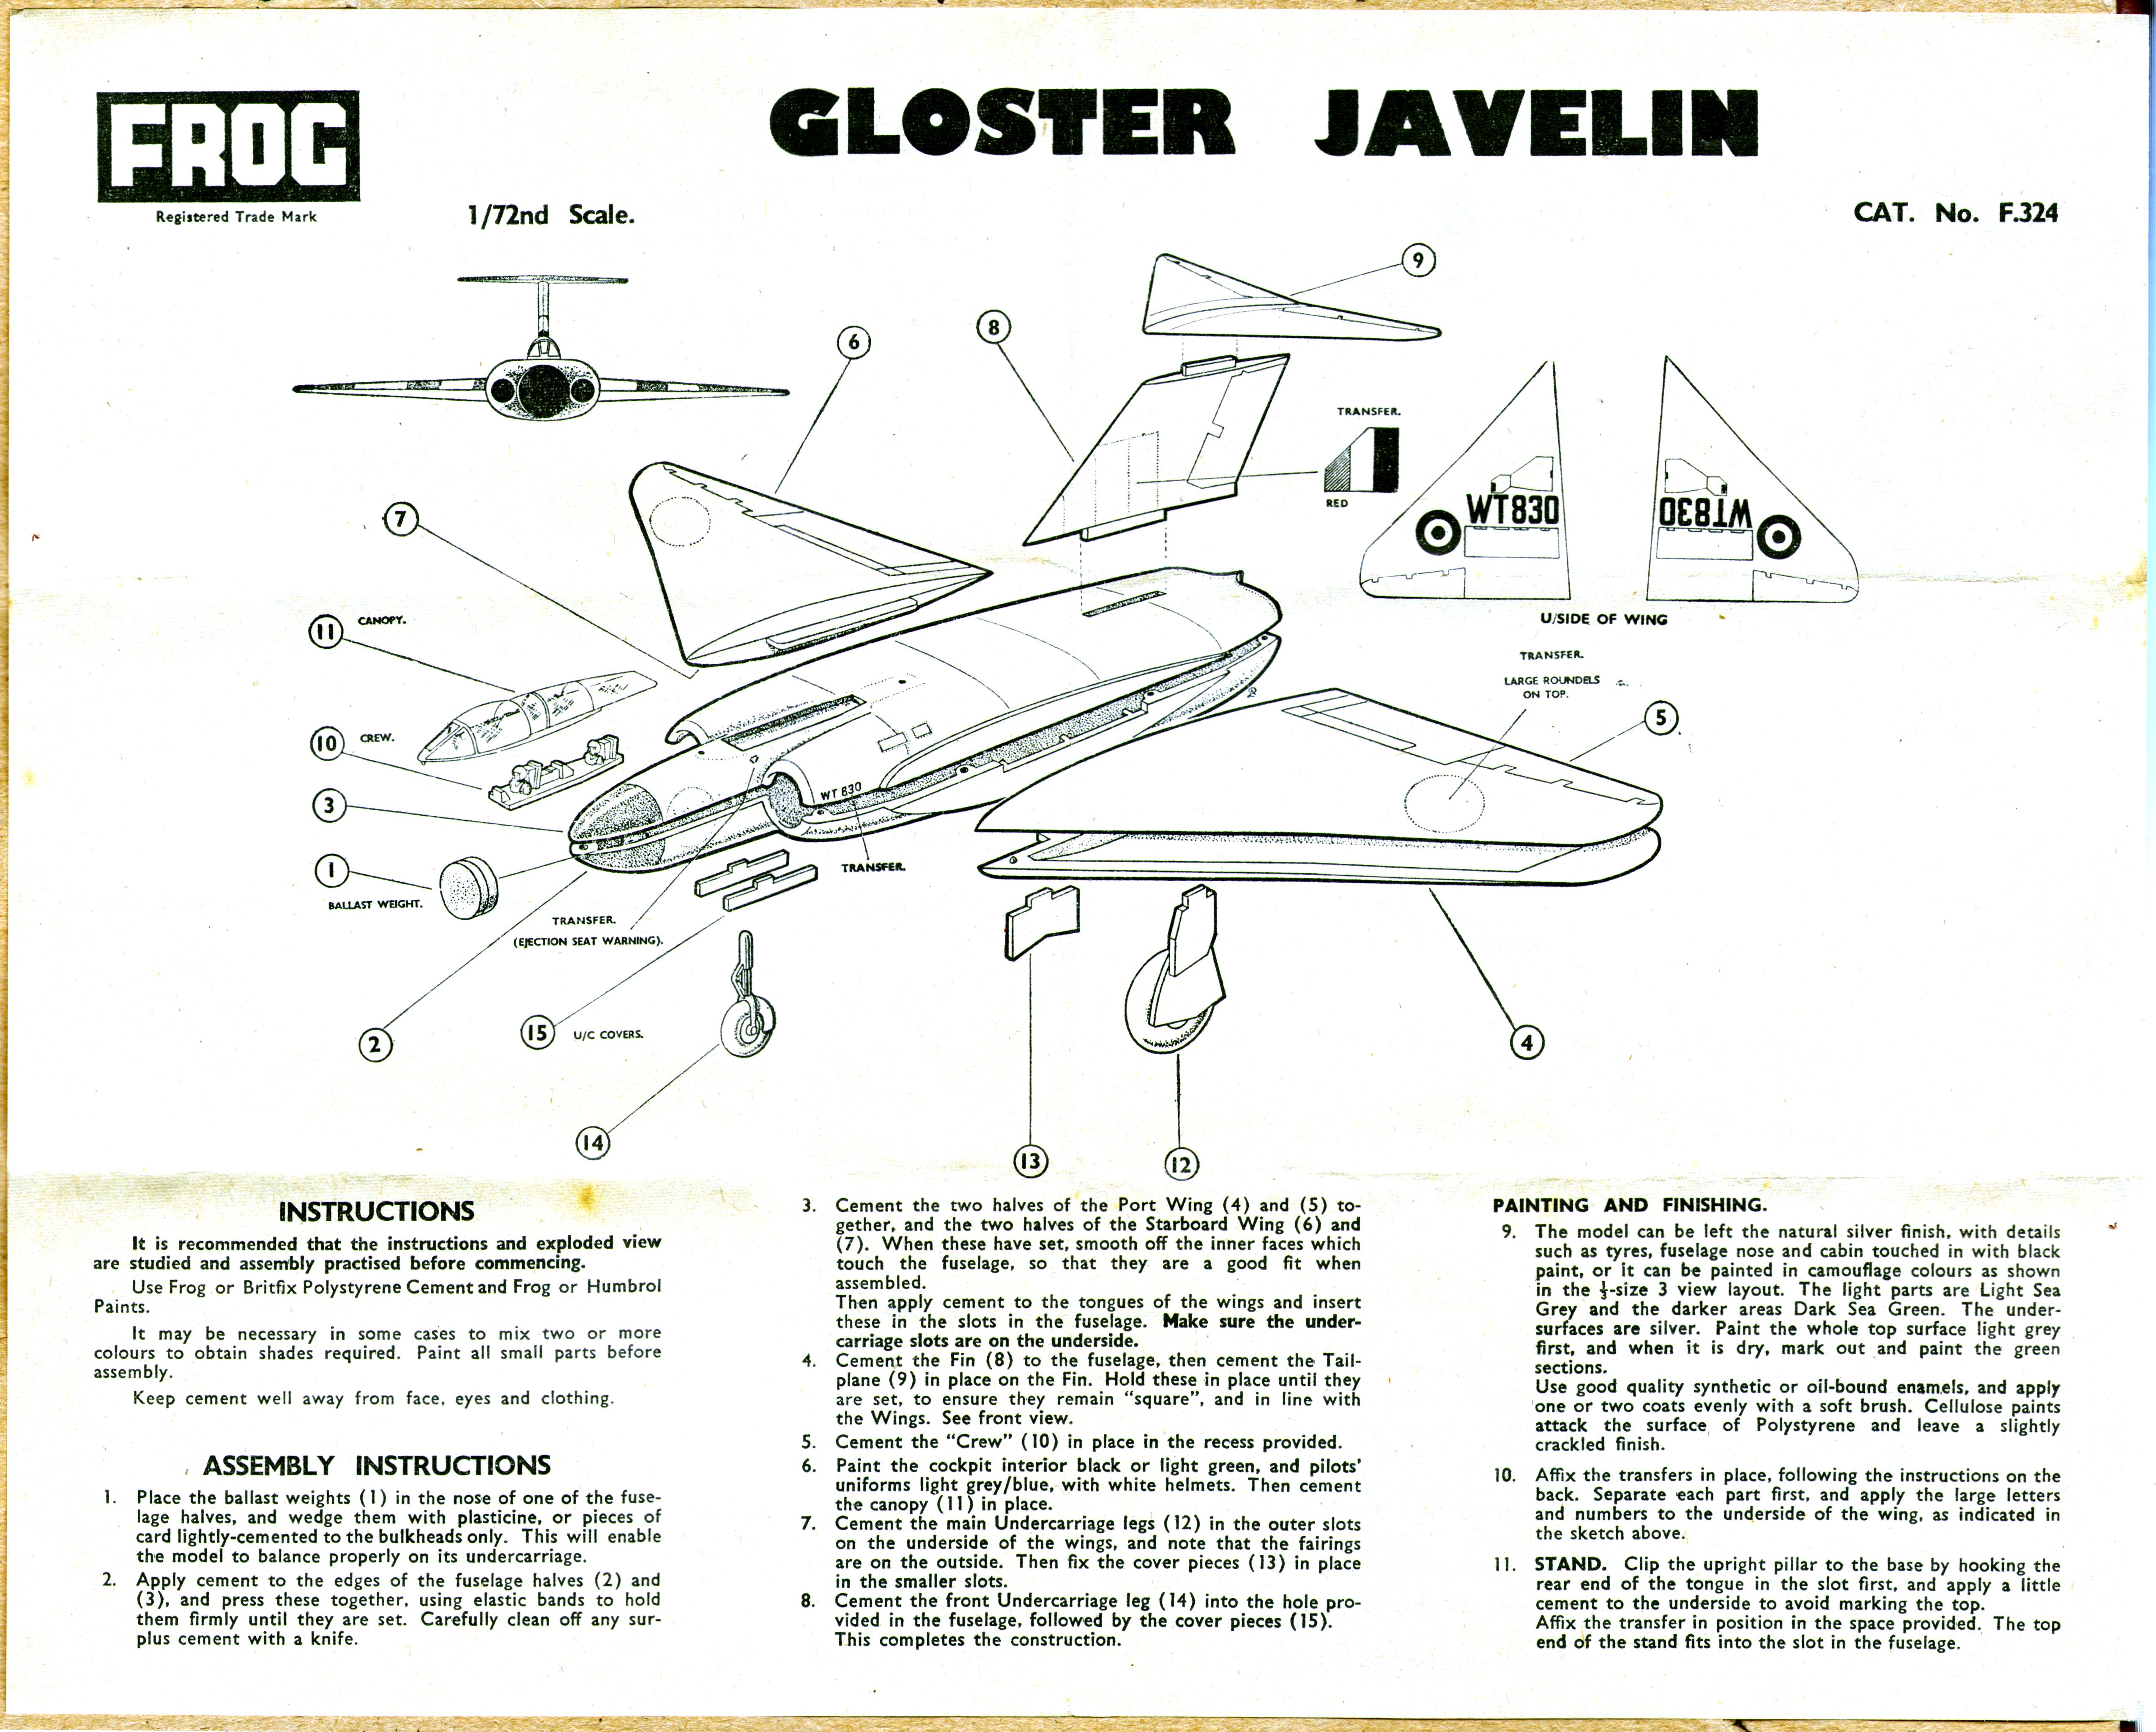 Сборочная инструкция FROG 324P Gloster Javelin, International Model Aircraft, 1964